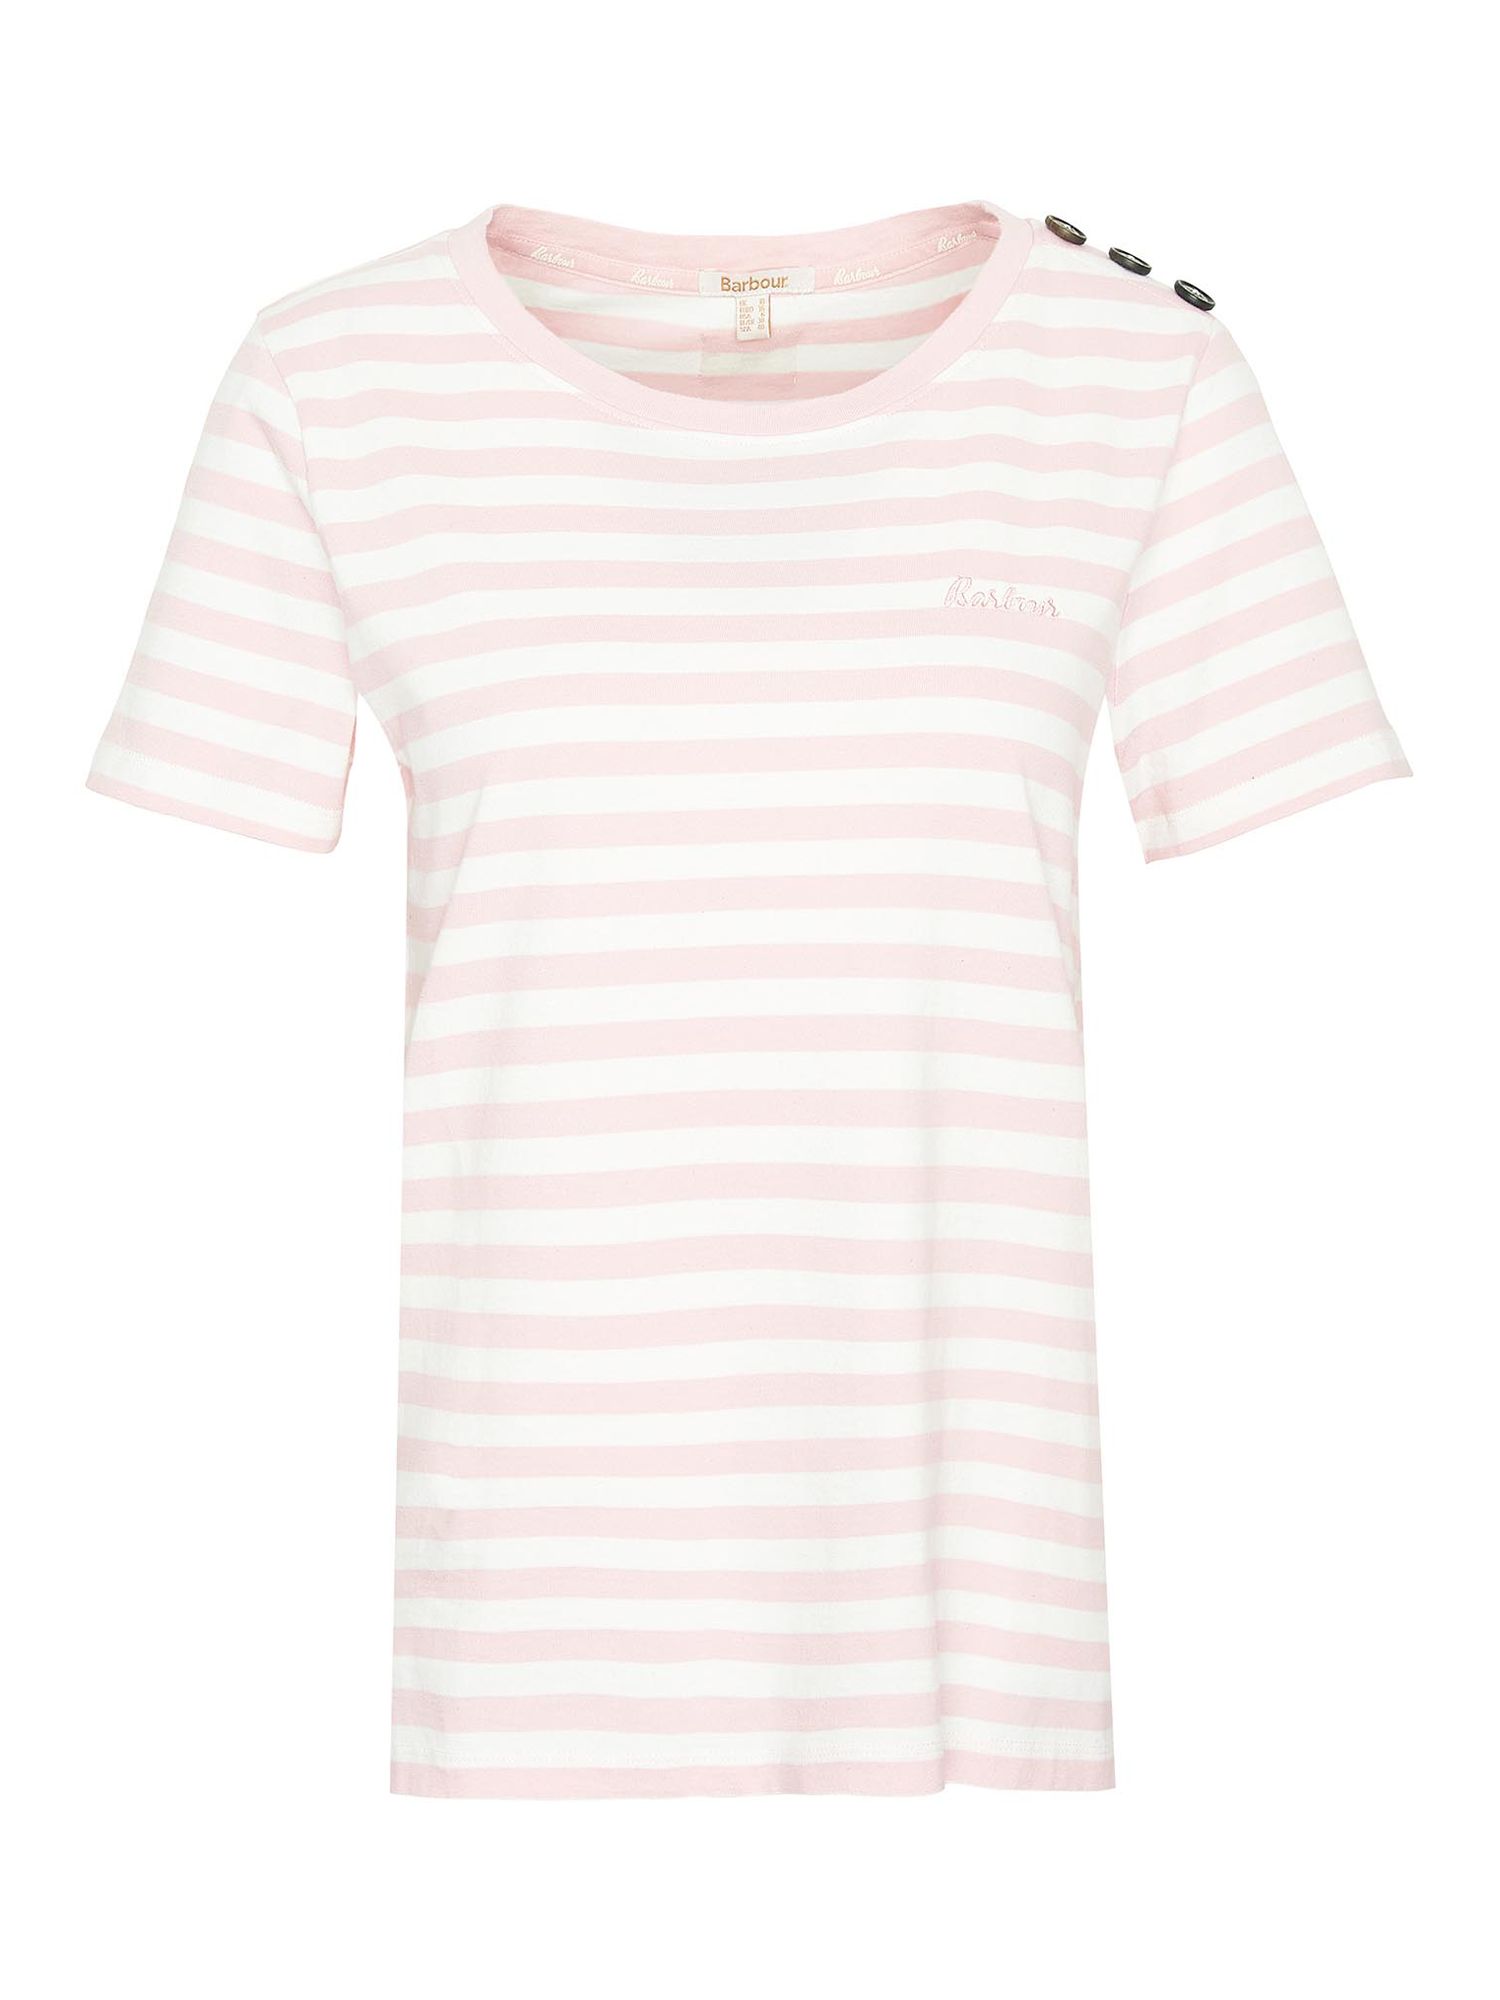 Buy Barbour Ferryside Stripe T-Shirt Online at johnlewis.com